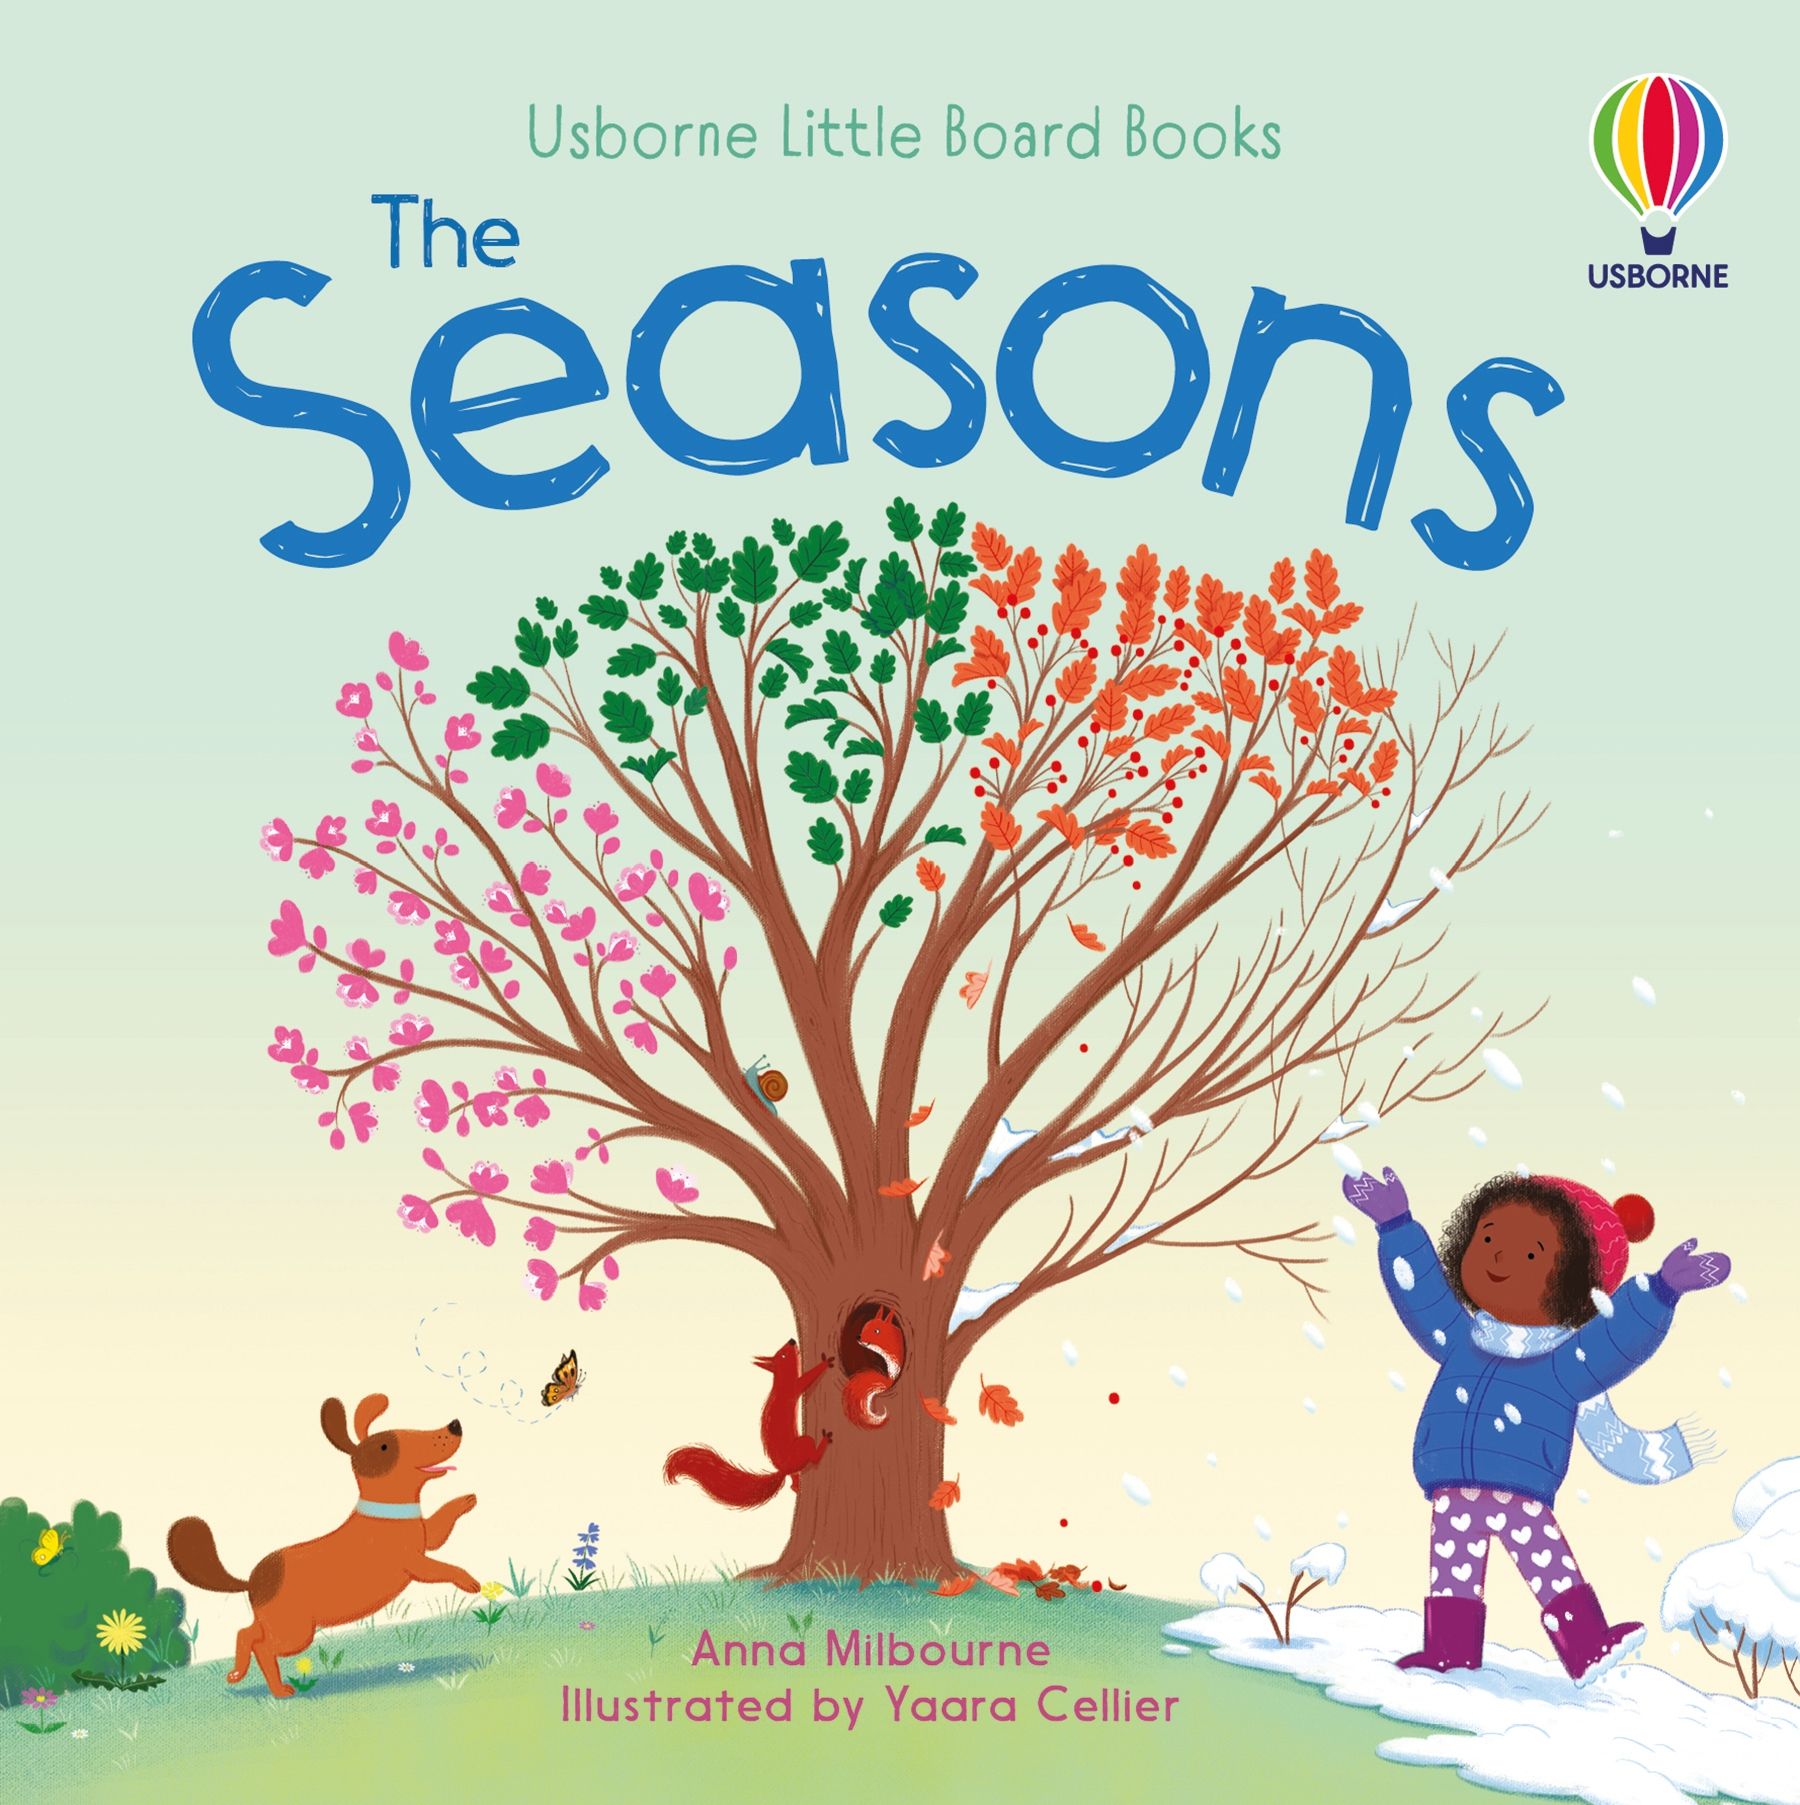 Usborne Little Board Books: The Seasons